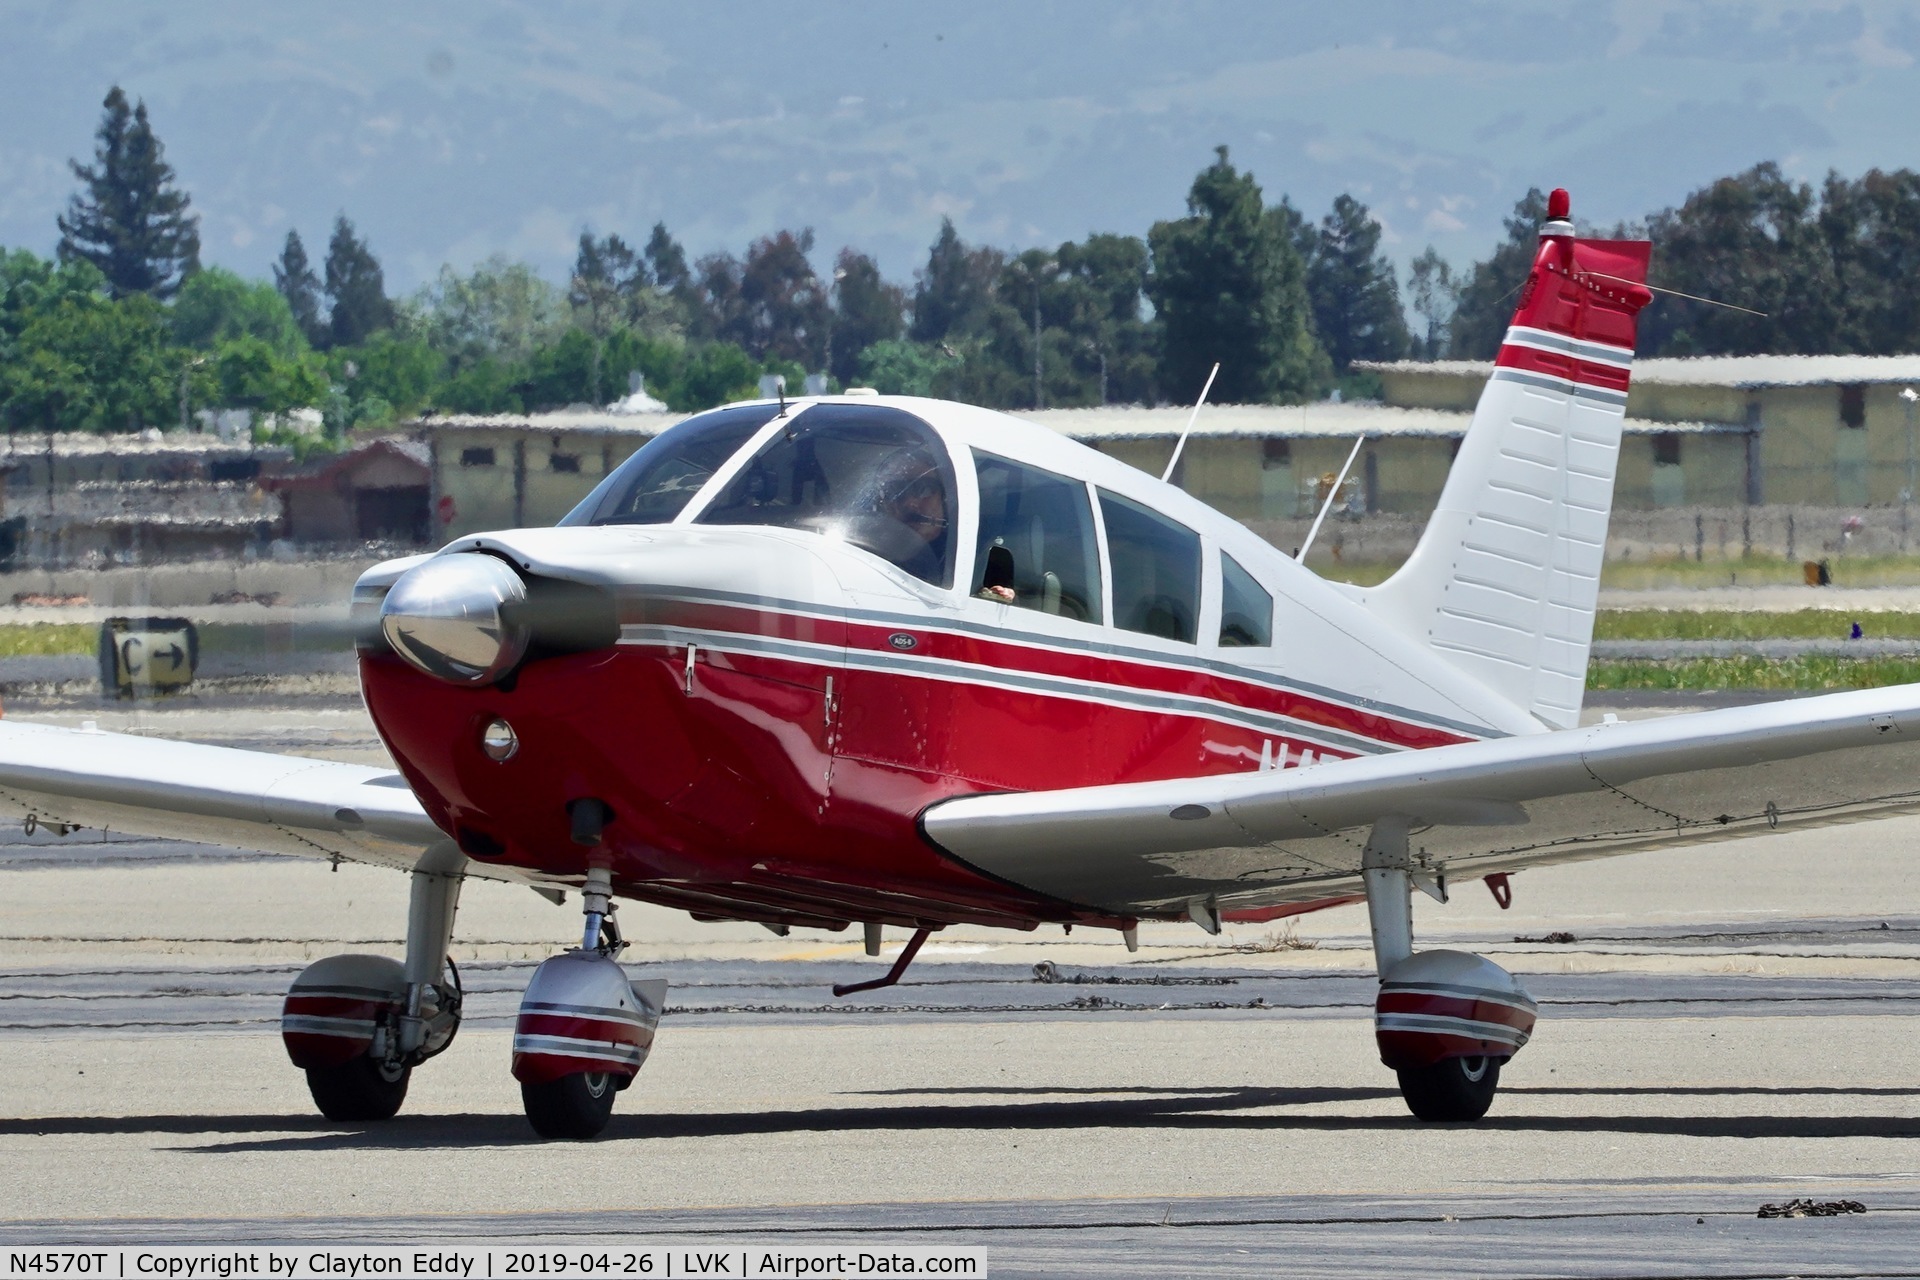 N4570T, 1972 Piper PA-28-235 C/N 28-7210013, Livermore Airport California 2019.